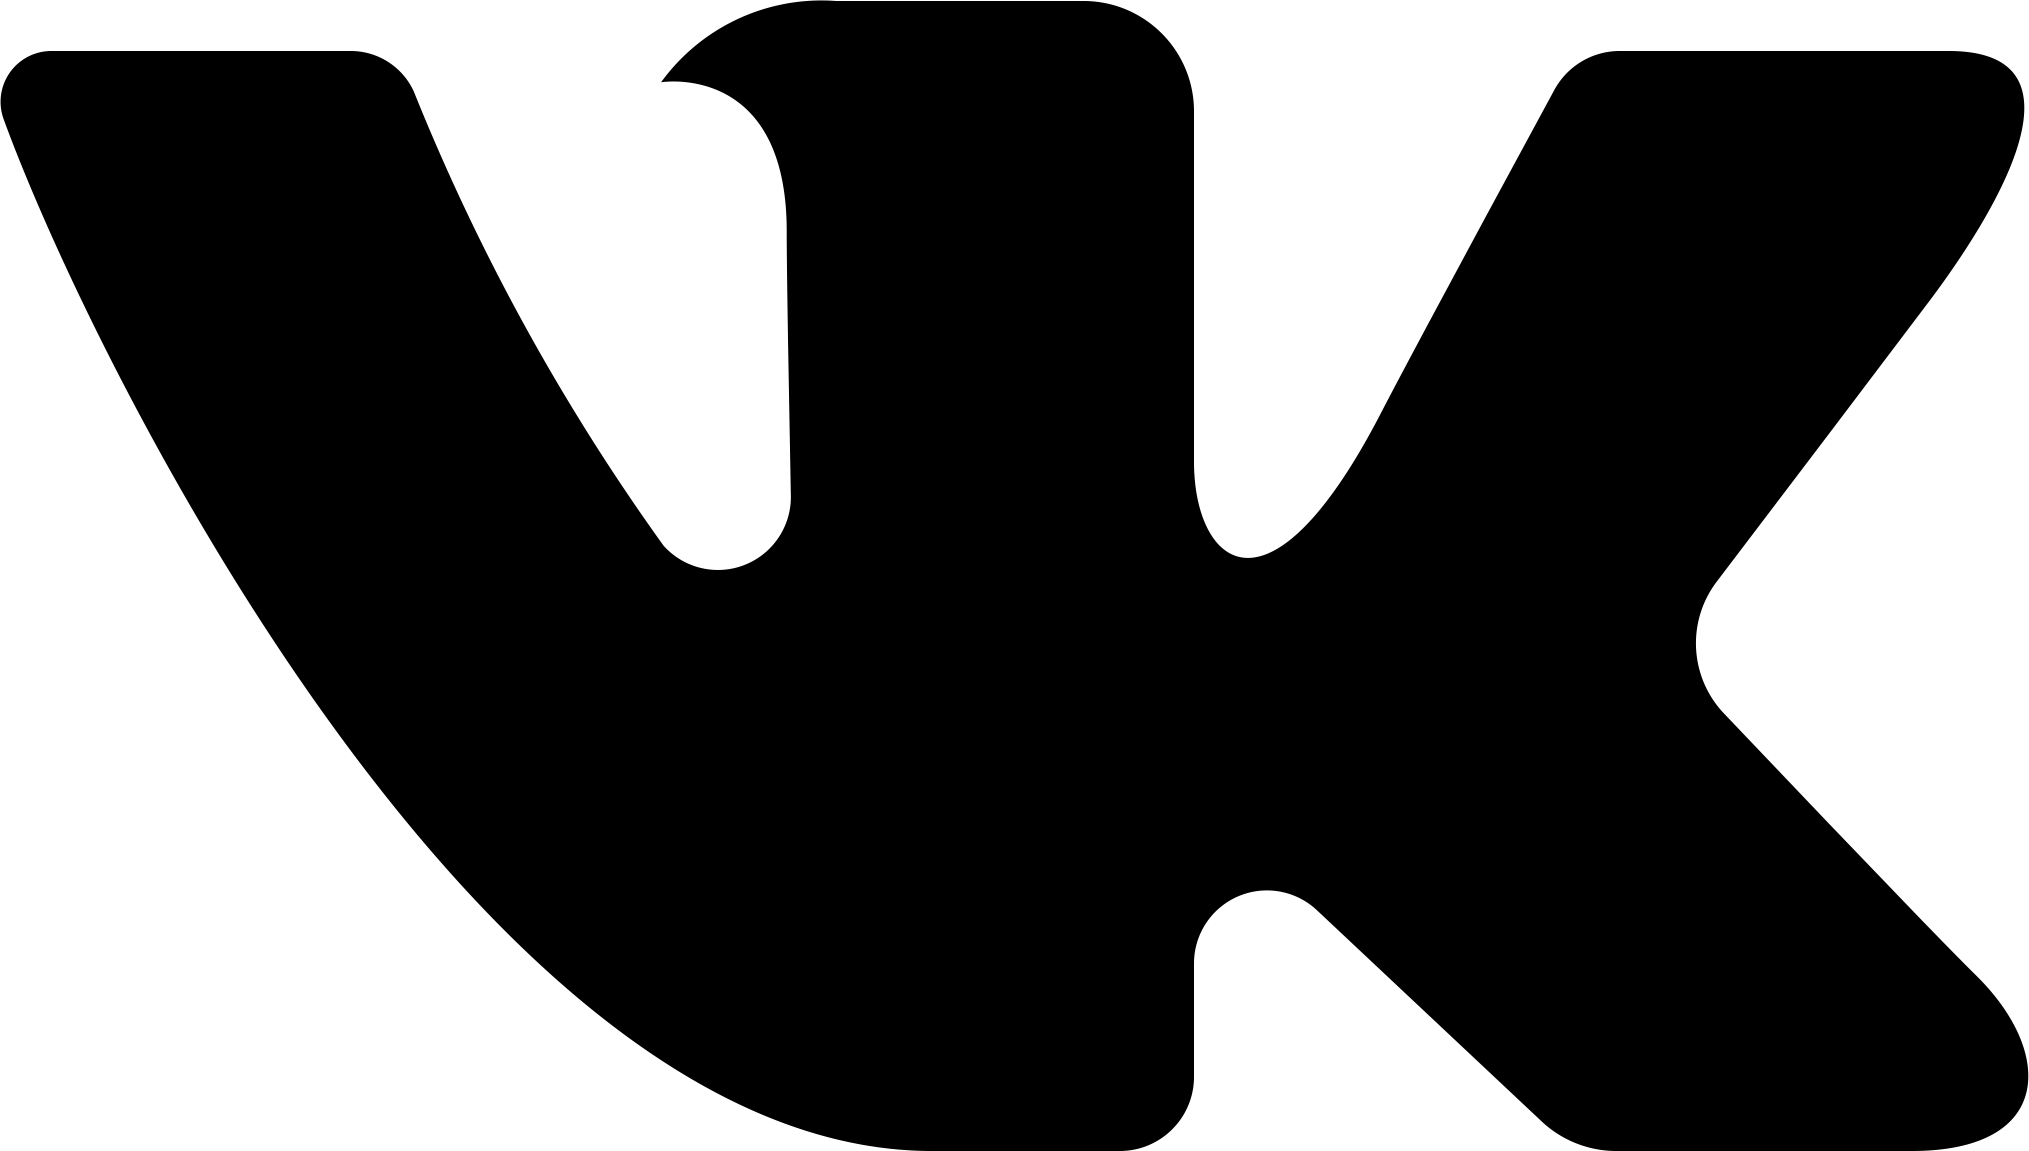 Png icon ru. Значок ВК. Логотип r. OBK логотип. Черный логотип ВК.